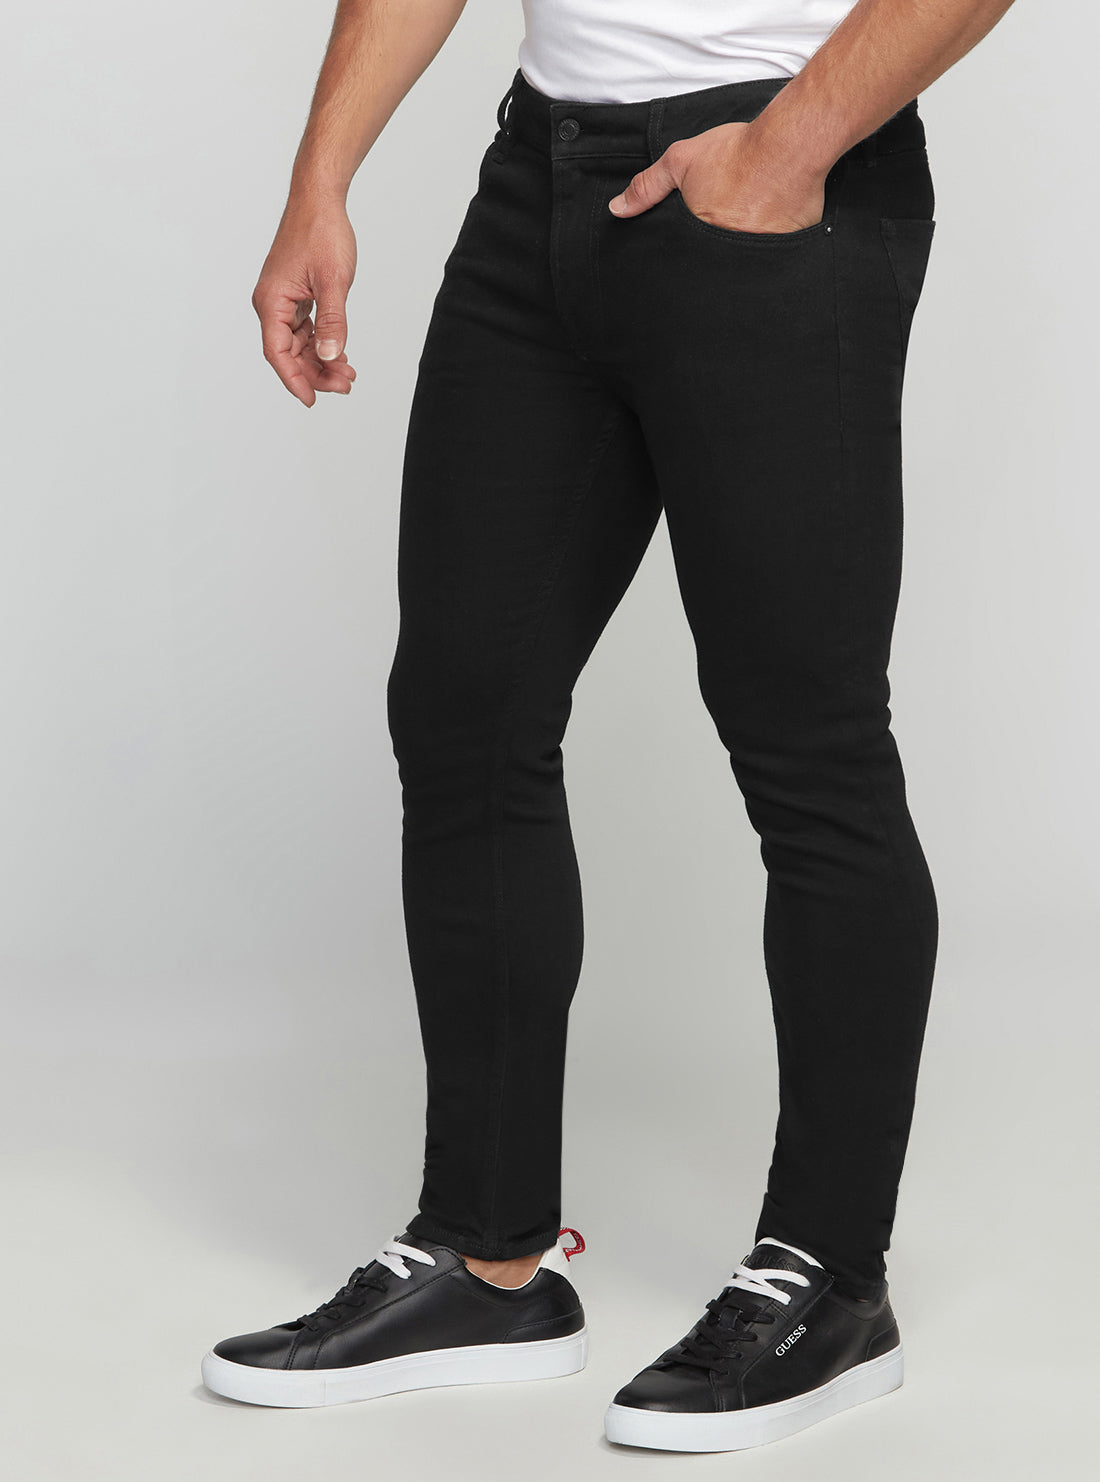 GUESS Men's Eco Low-Rise Slim Chris Denim Jeans In Carry Black Wash M2YA27D4Q51 Side View